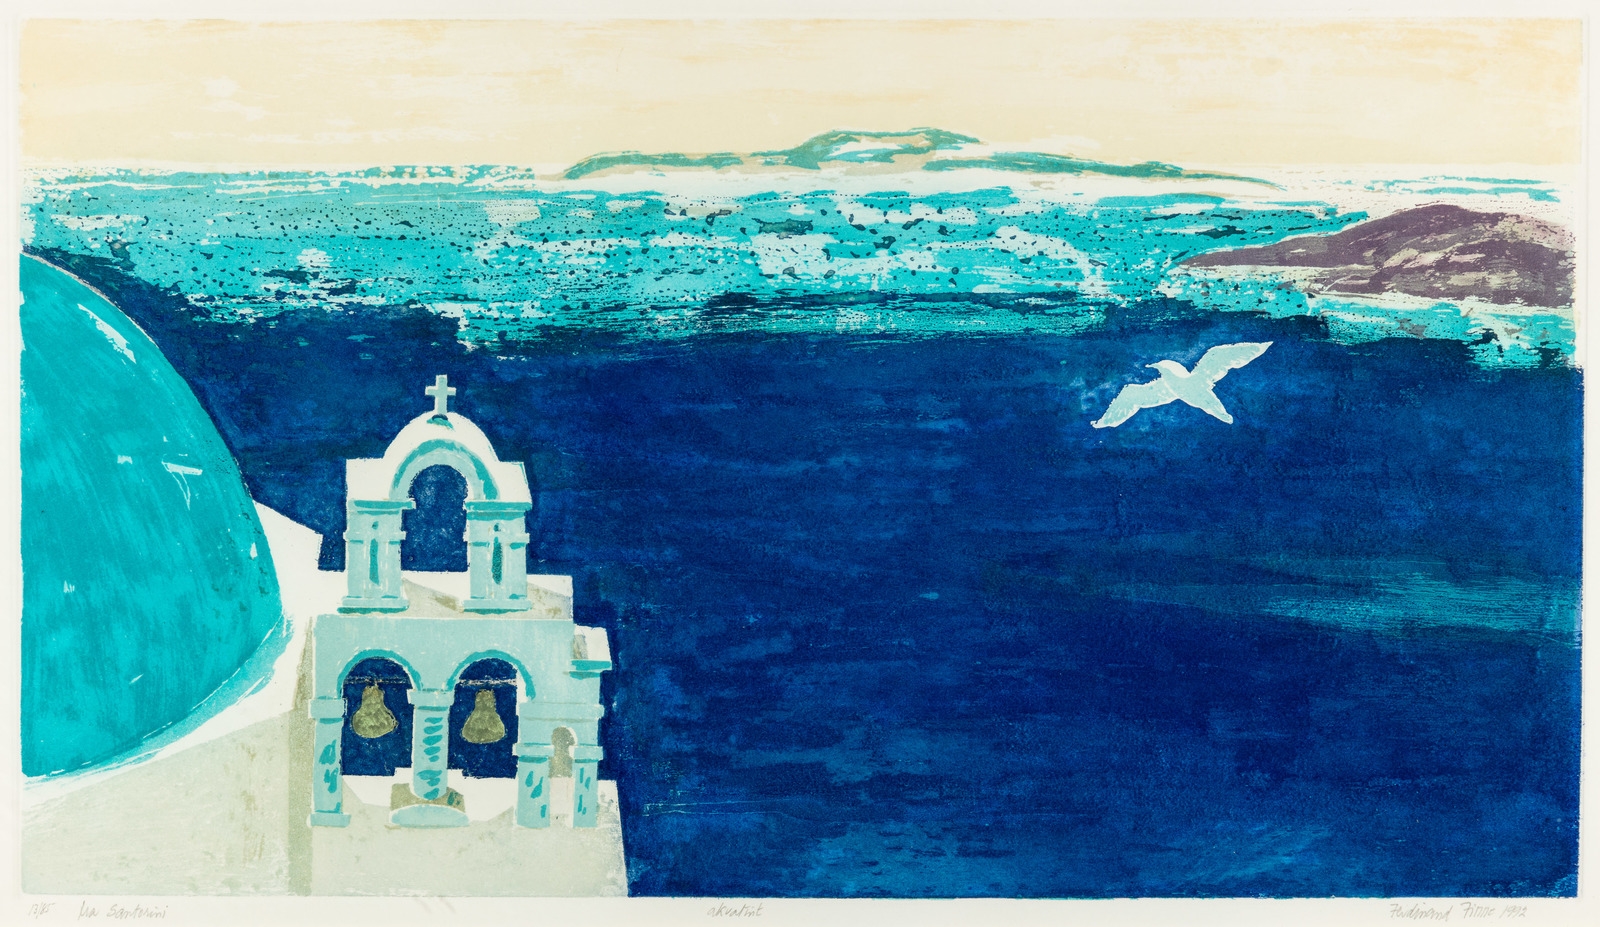 Artwork by Ferdinand Finne, "Fra Santorini", Made of Color aquatint